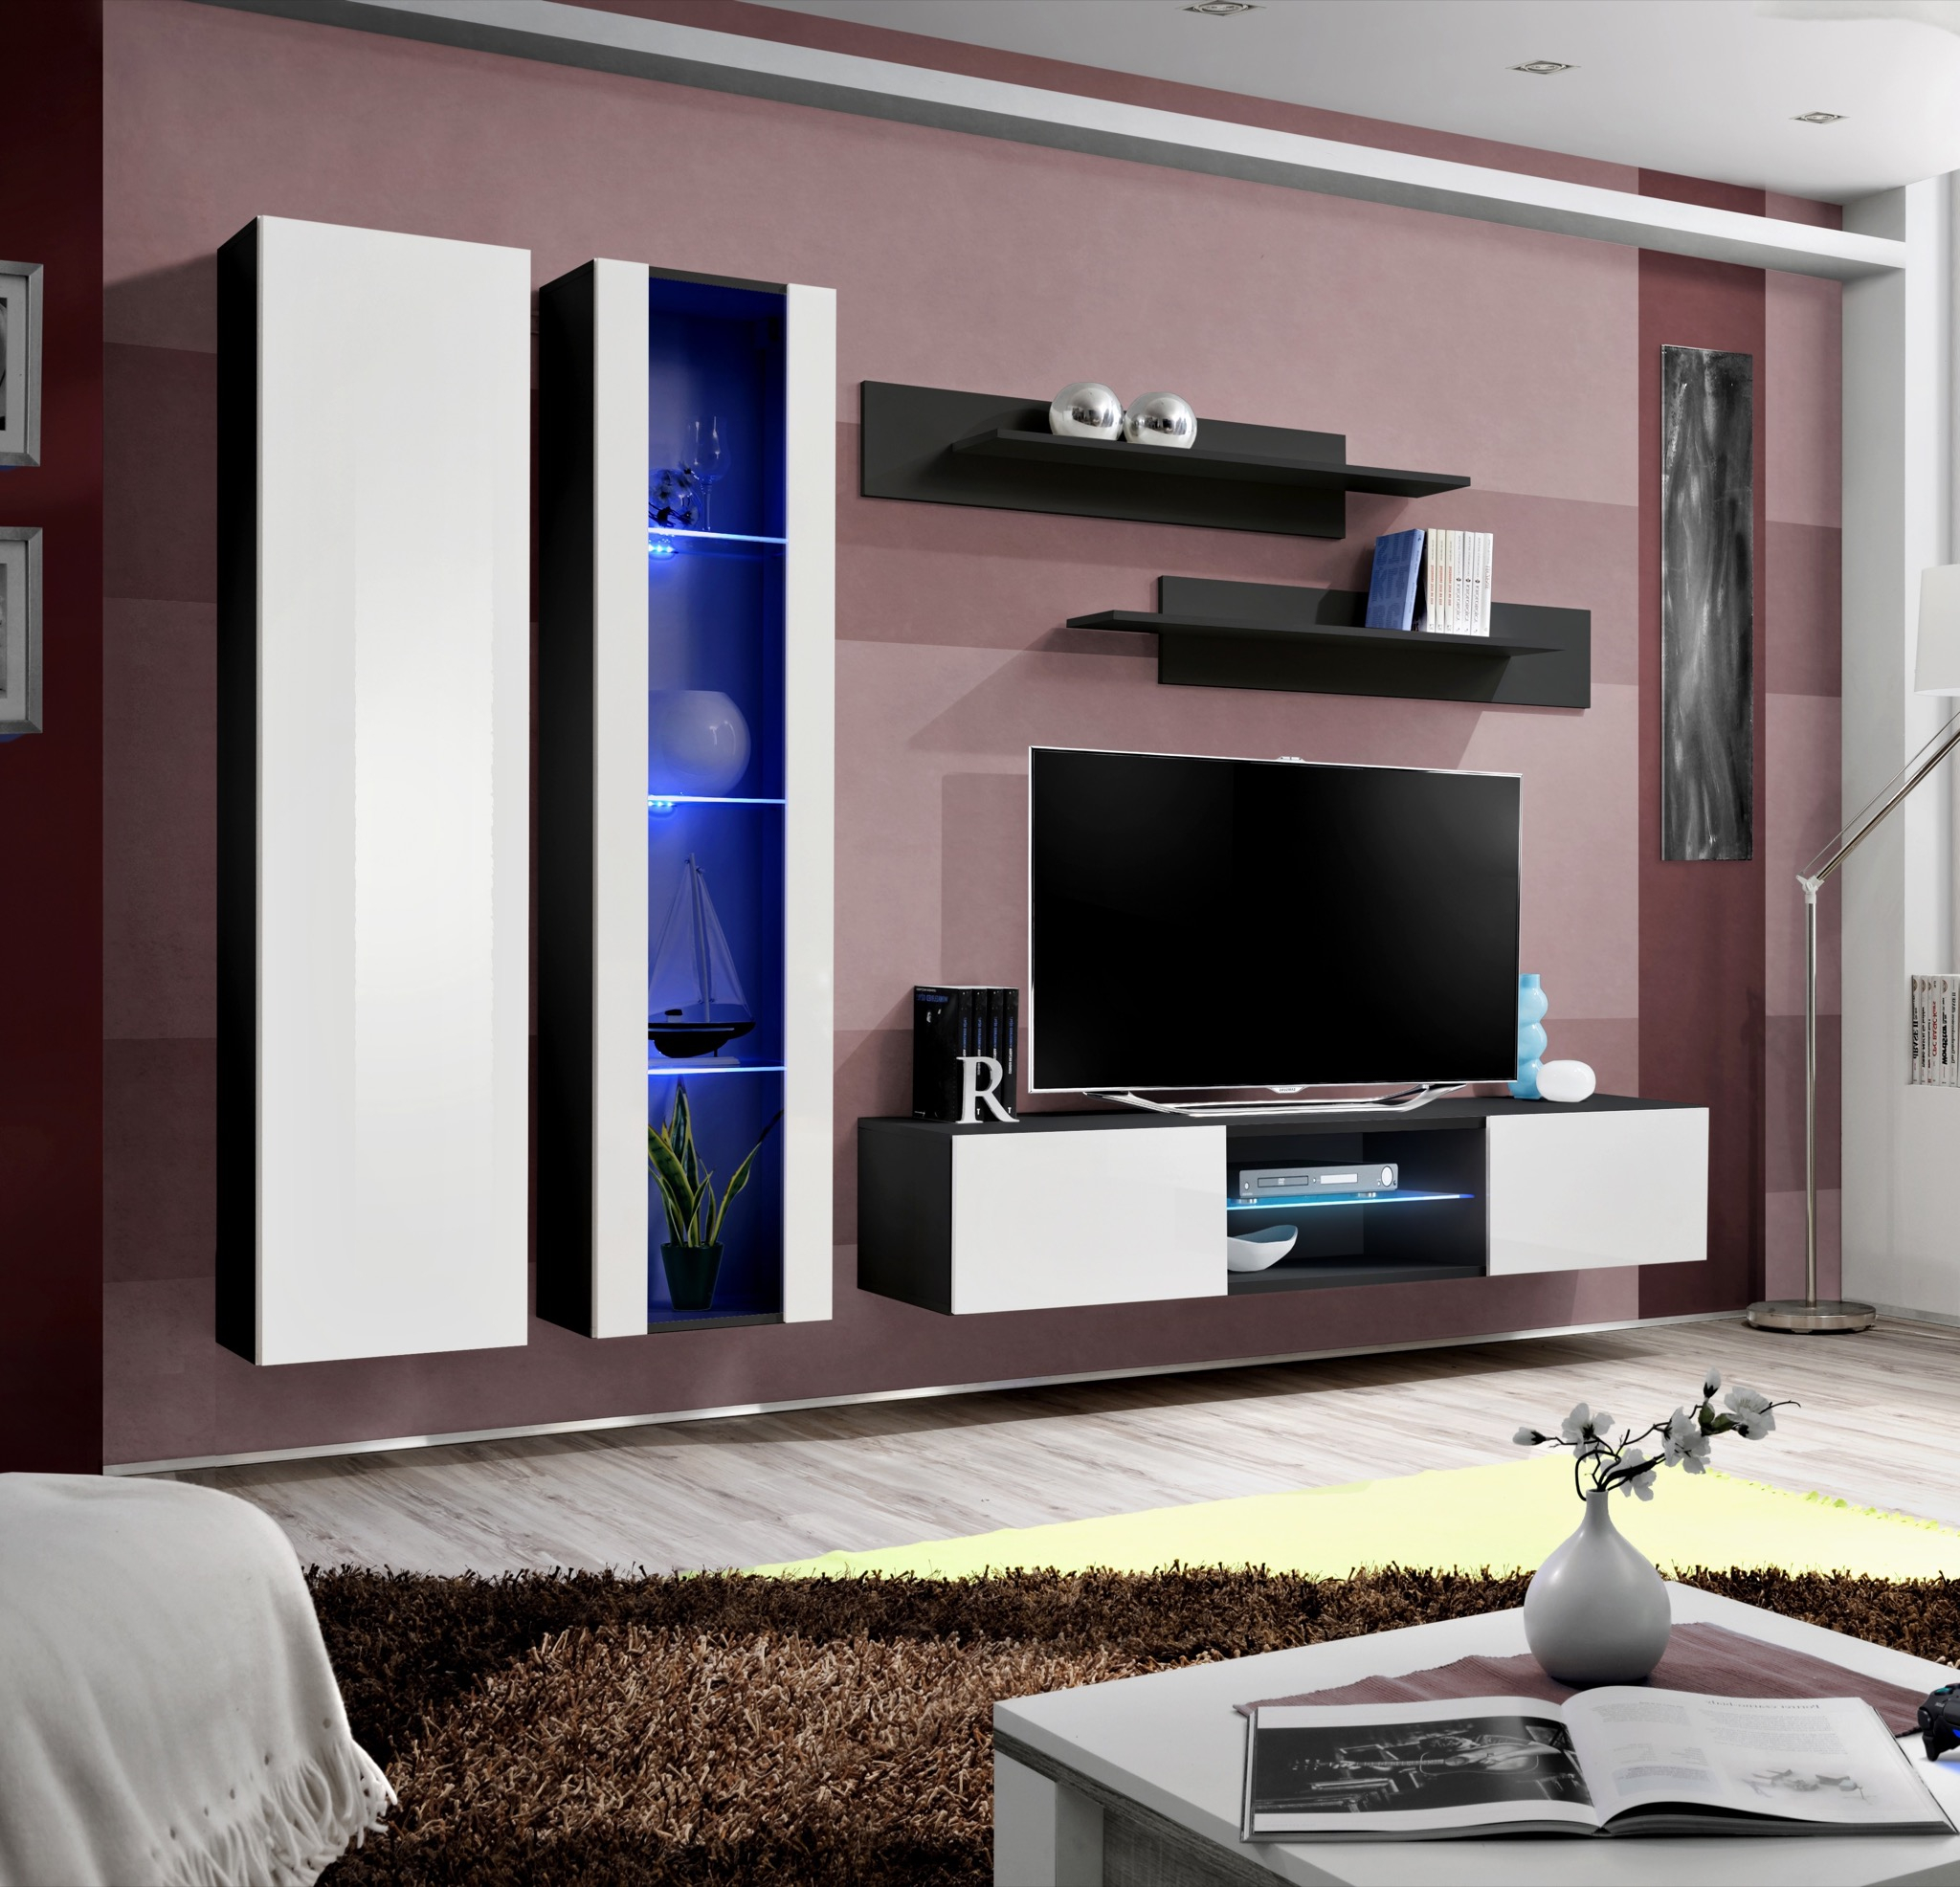 Ensemble meuble TV mural - FLY O4 - 260 x 40 x 190 cm - Blanc et noir